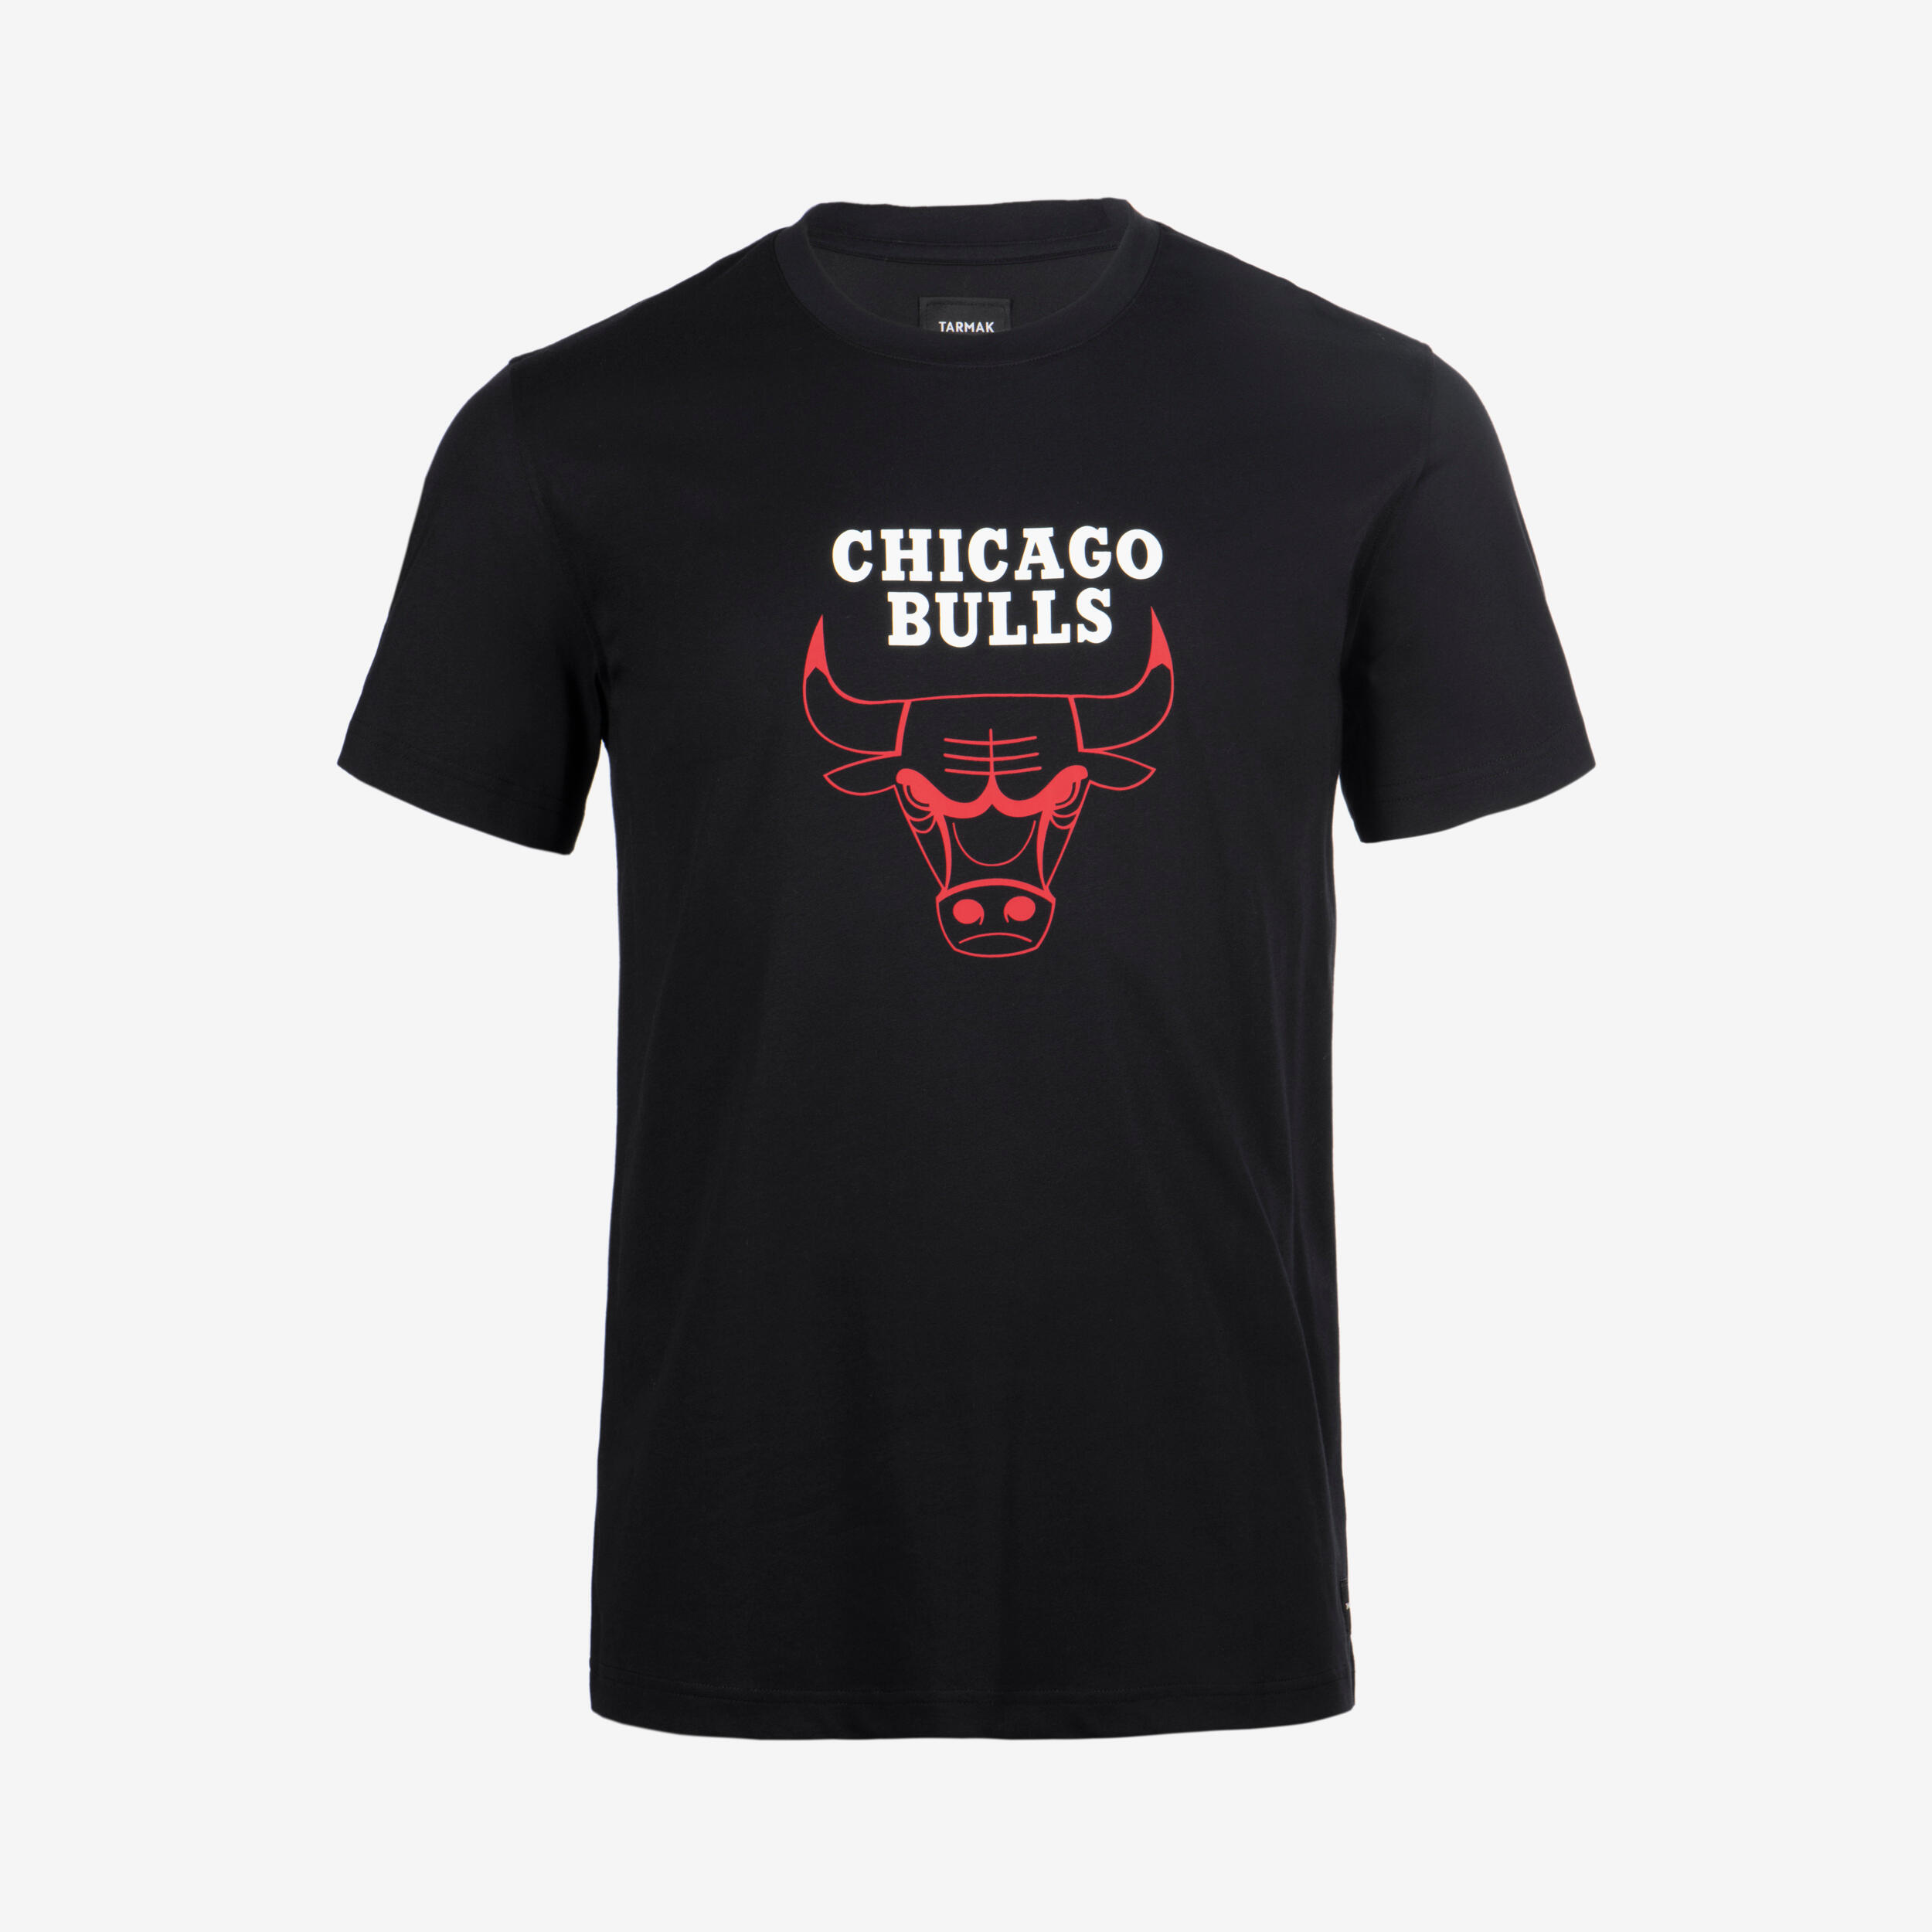 Unisex Basketball T-Shirt NBA Chicago Bulls 900 - Black 8/8